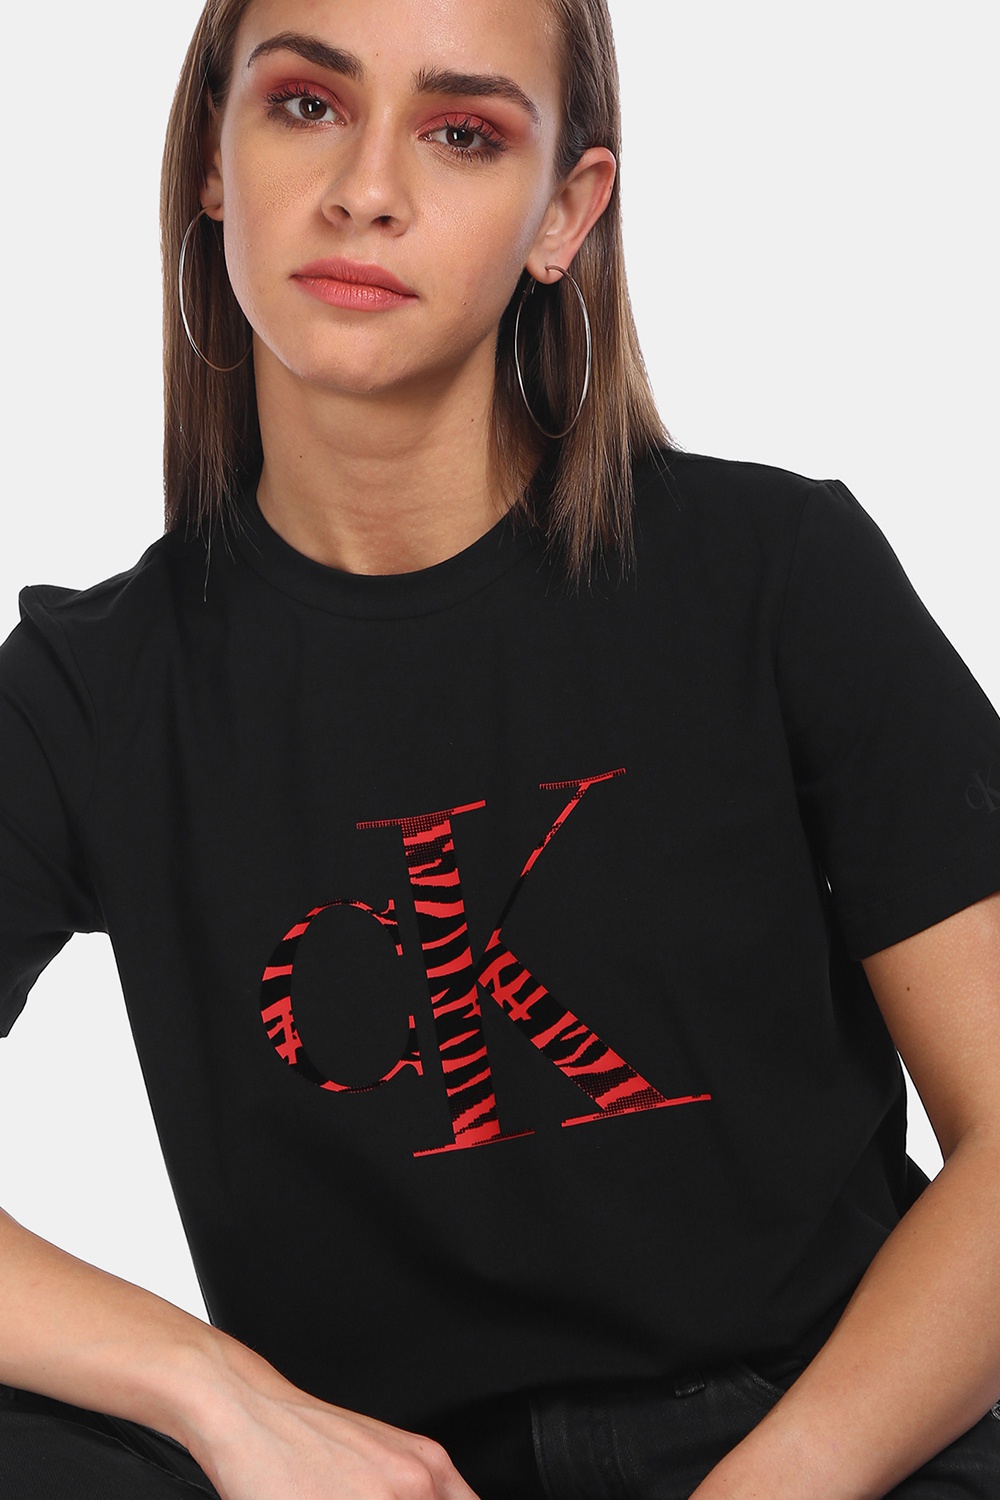 Calvin Klein womens Short Sleeve T-Shirt Monogram Logo